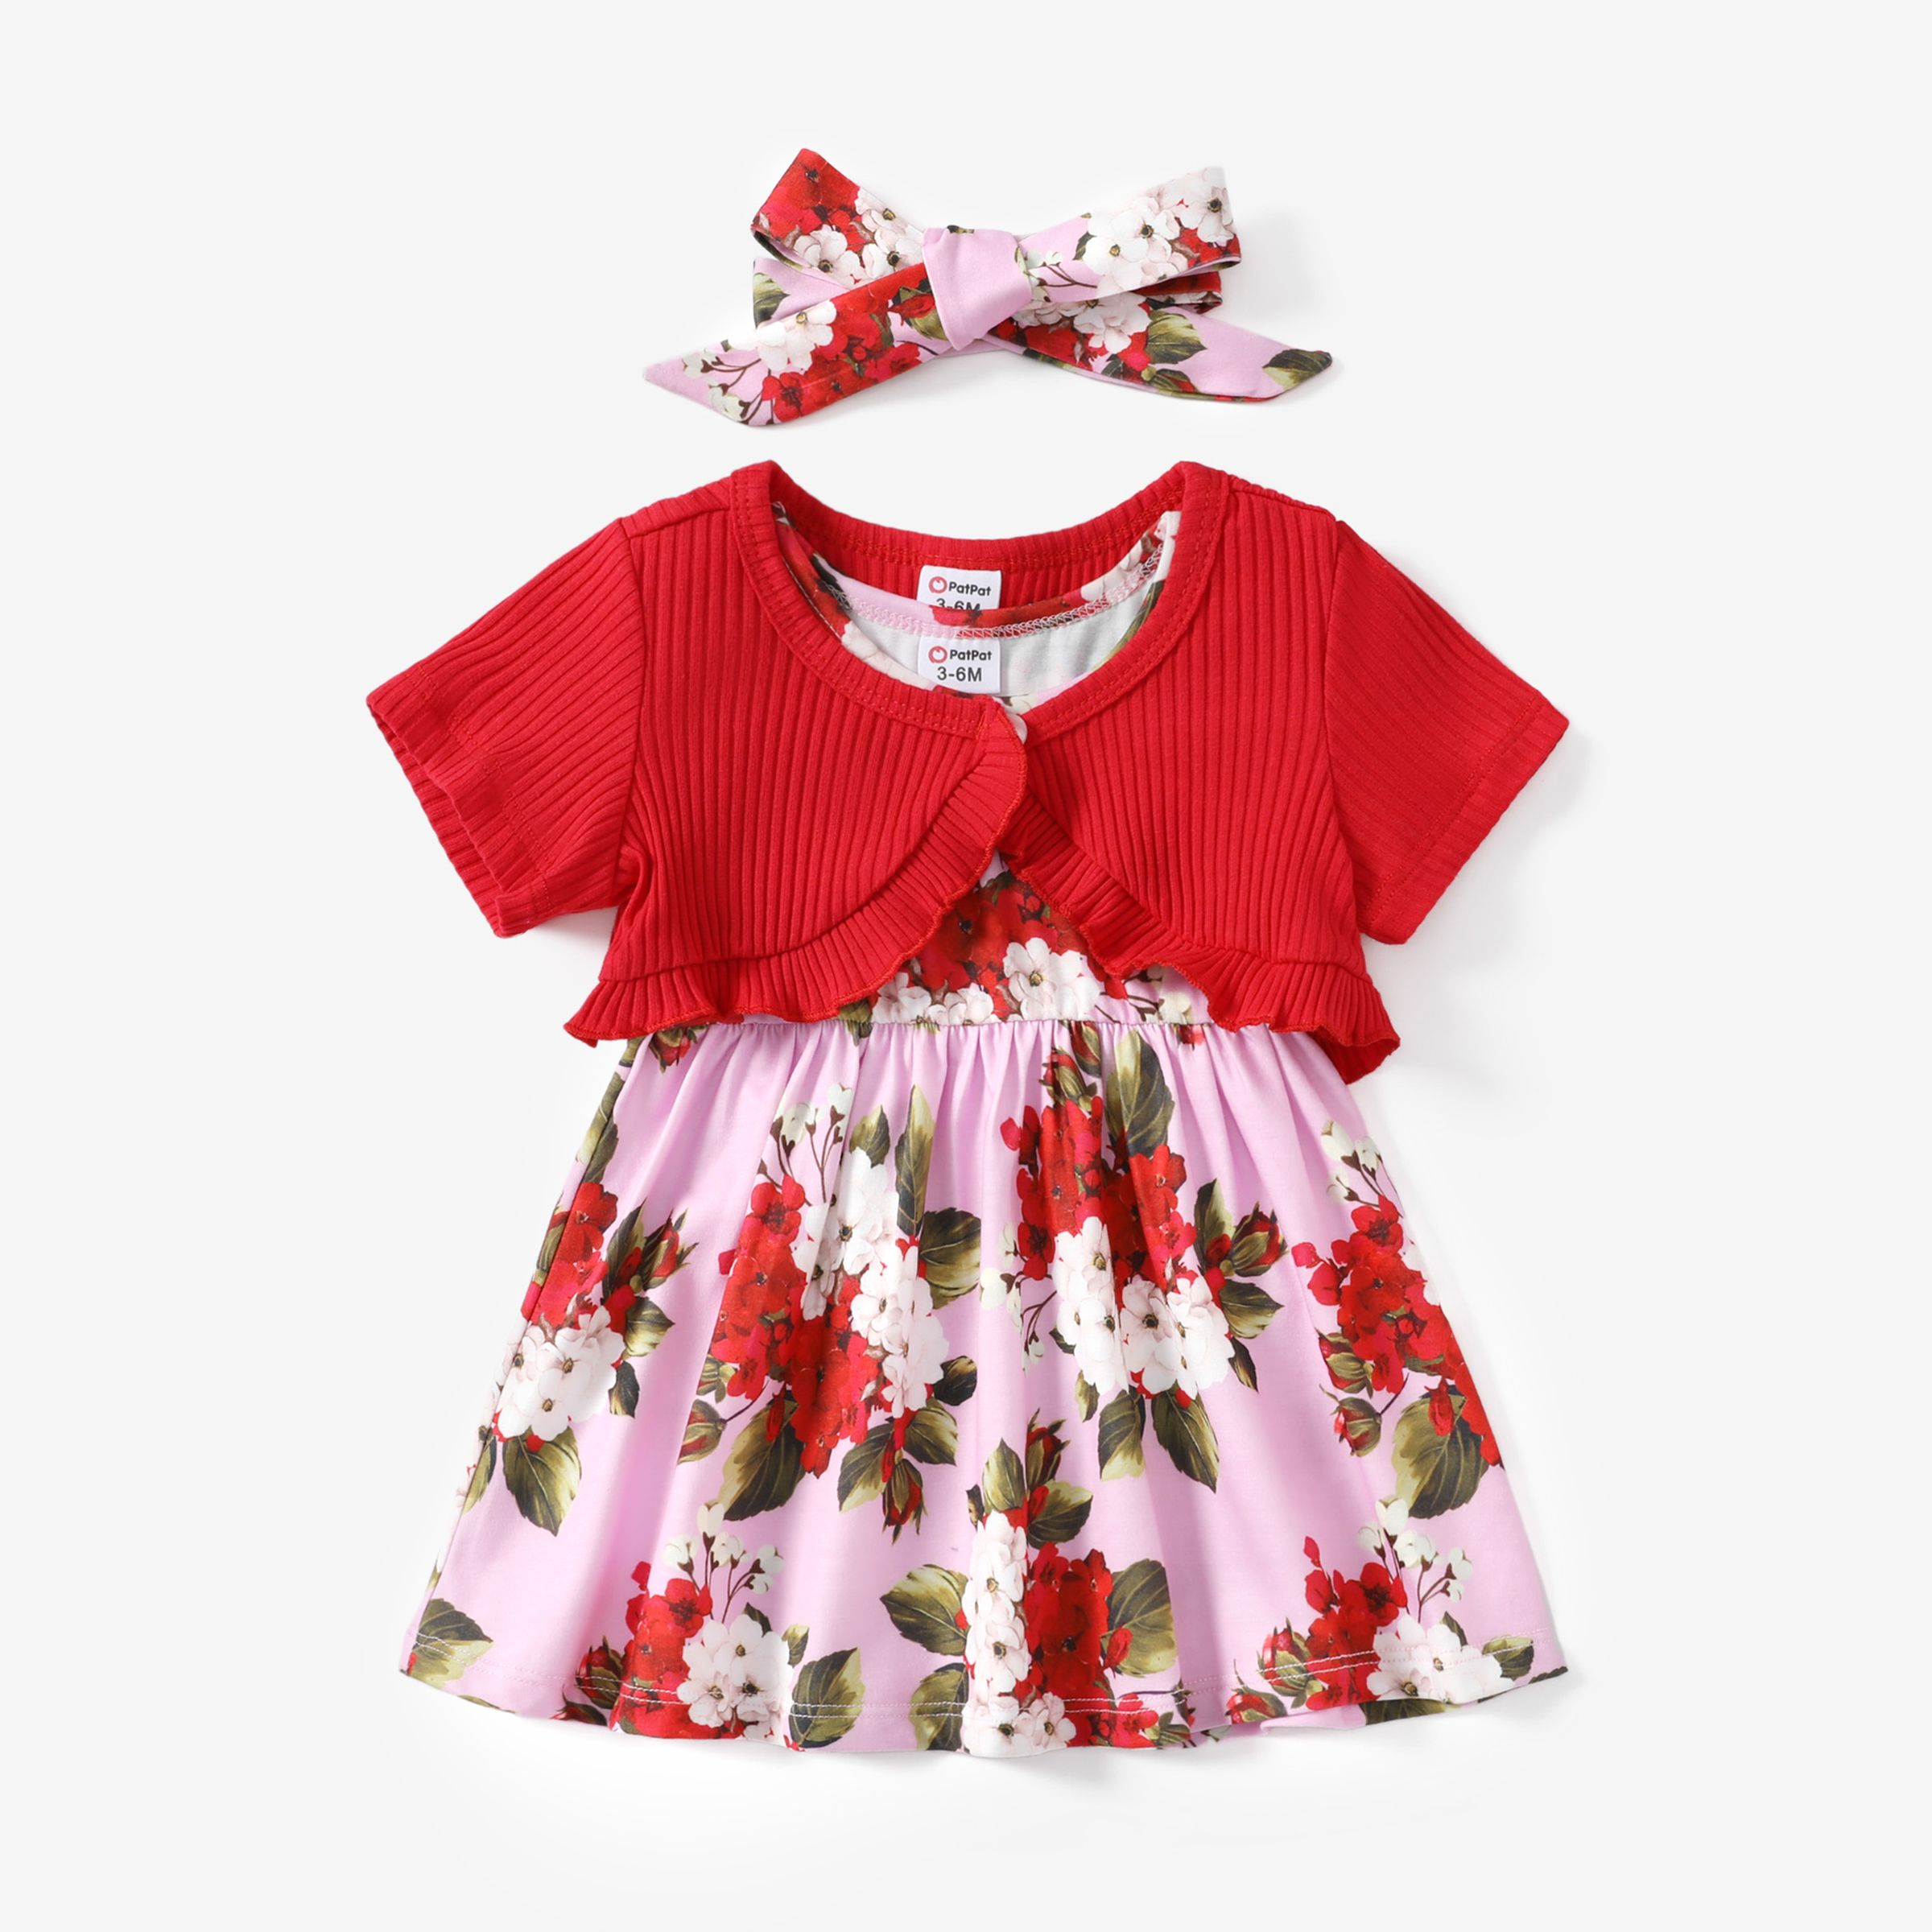 Baby Girl 3pcs Ruffled Cardigan and Floral Print Dress with Headband Set